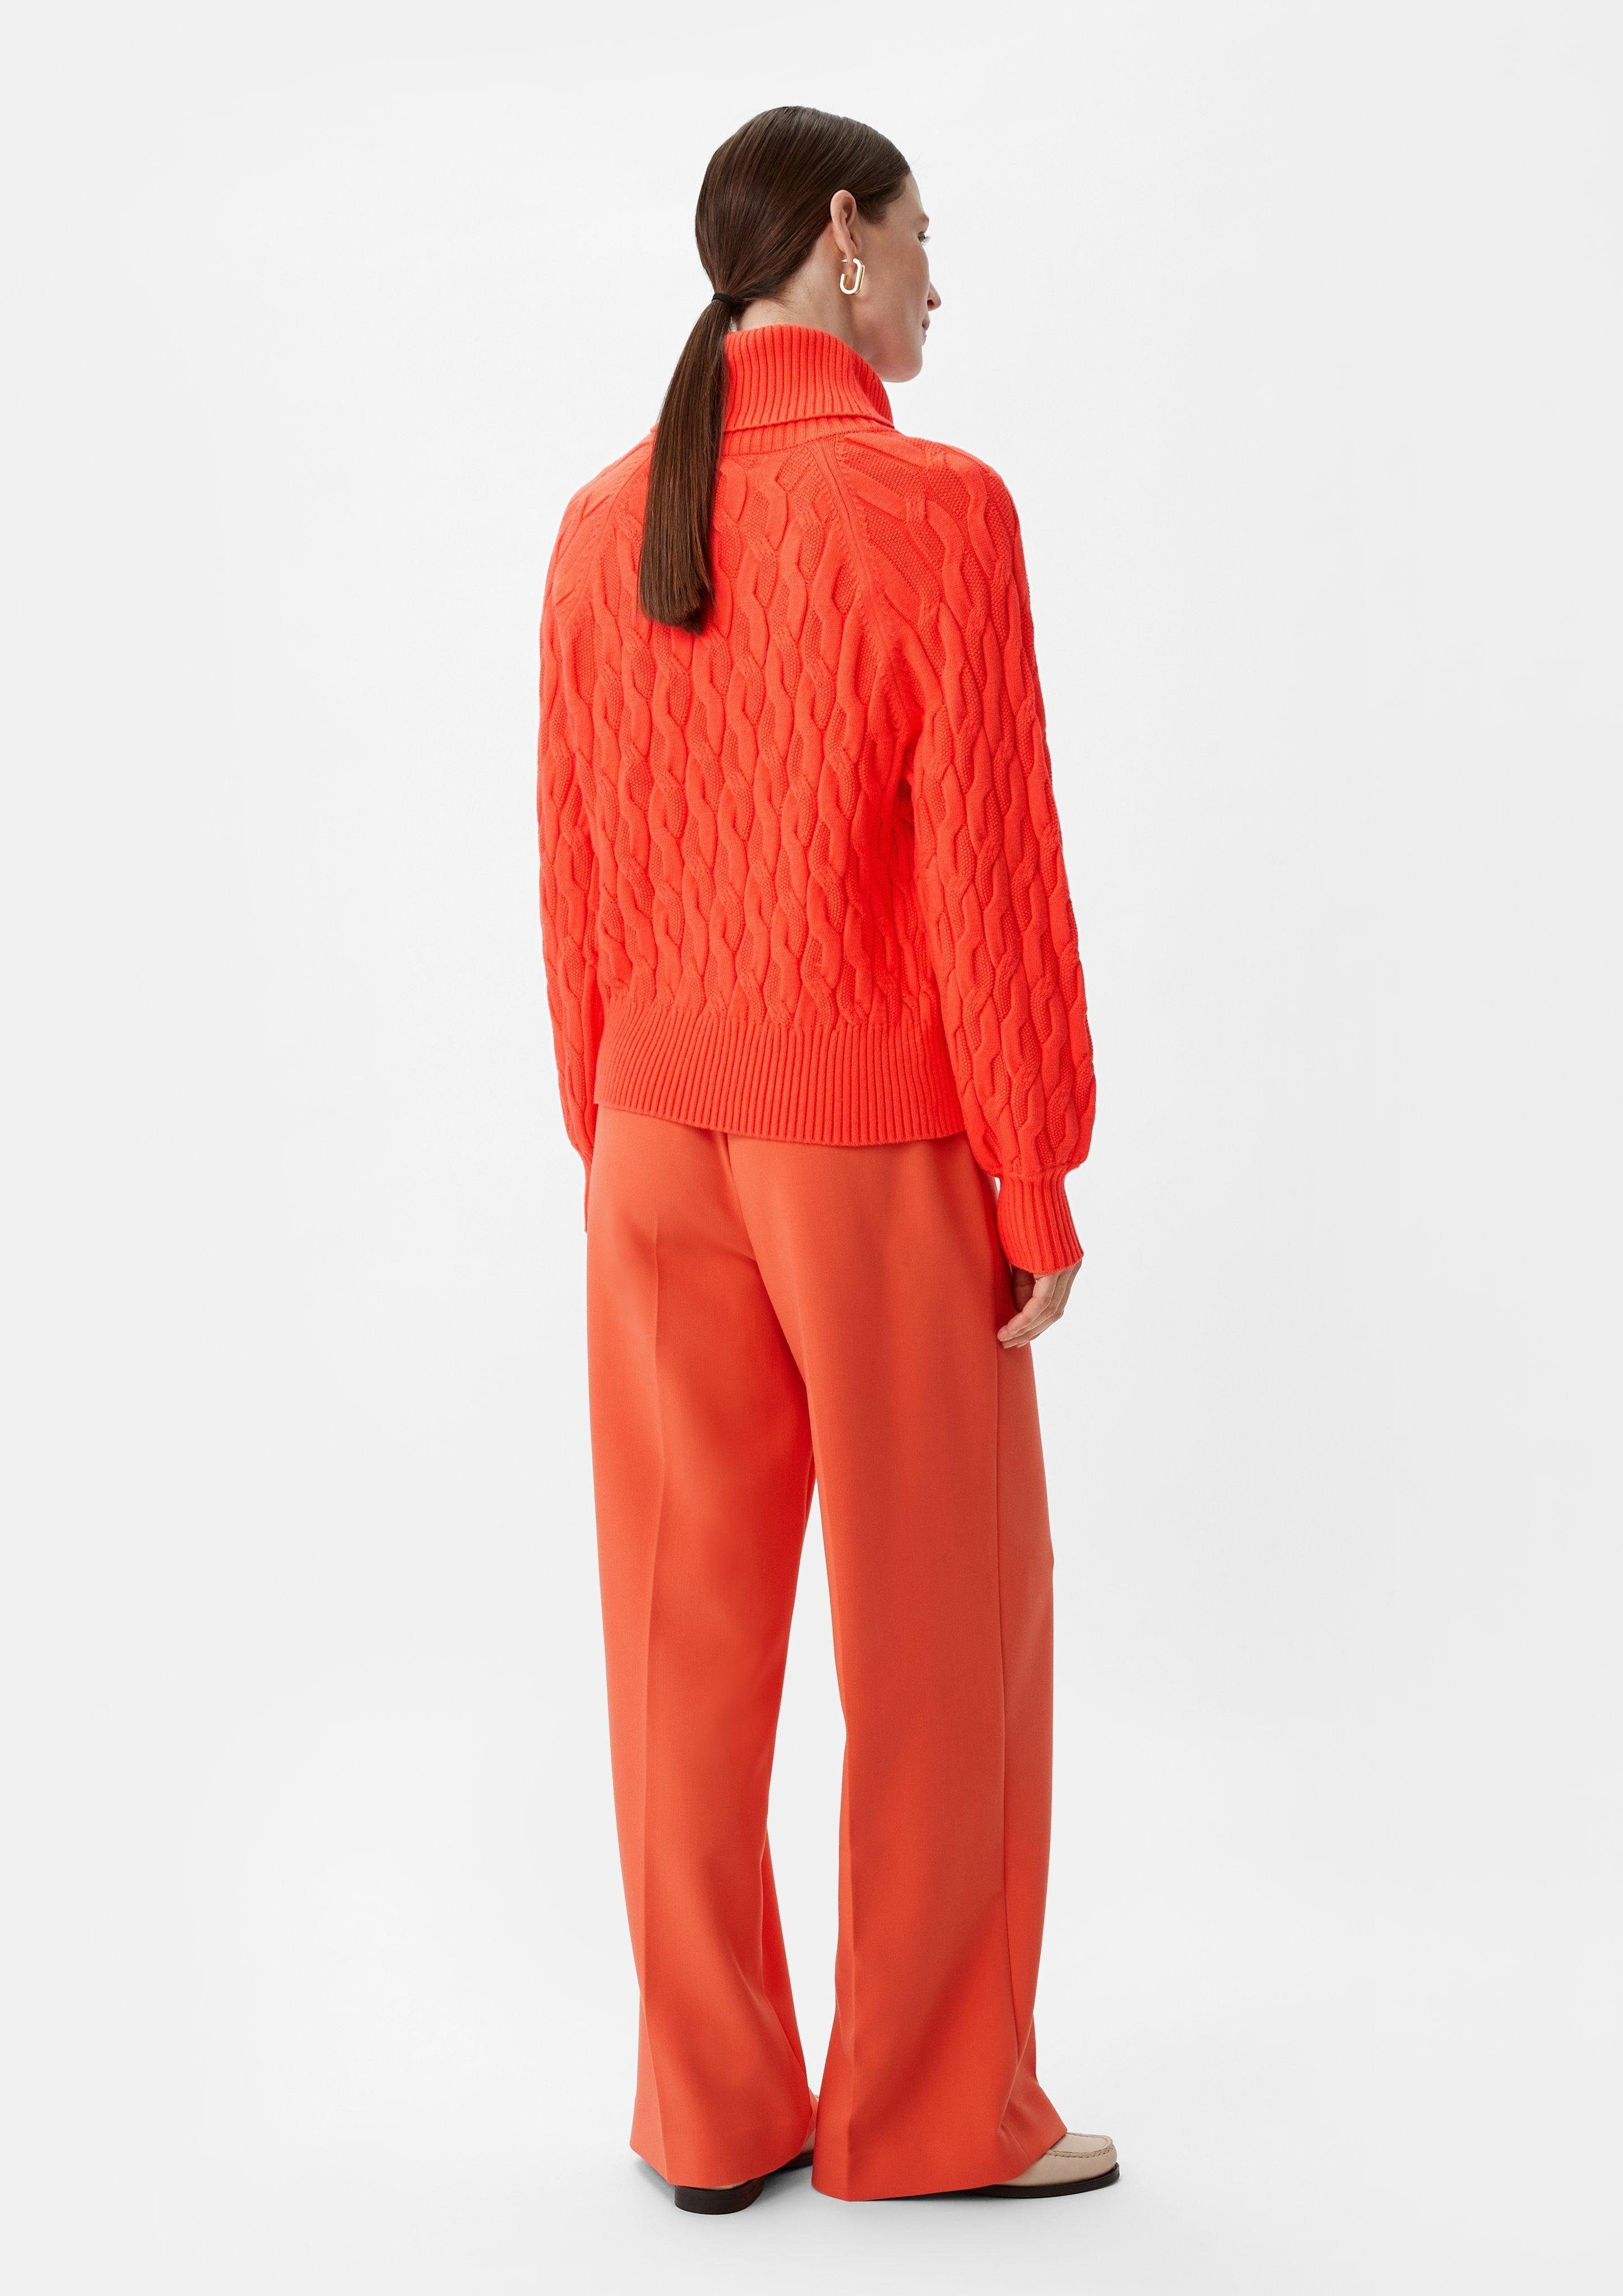 Comma Strickmuster mit orange Langarmshirt Pullover